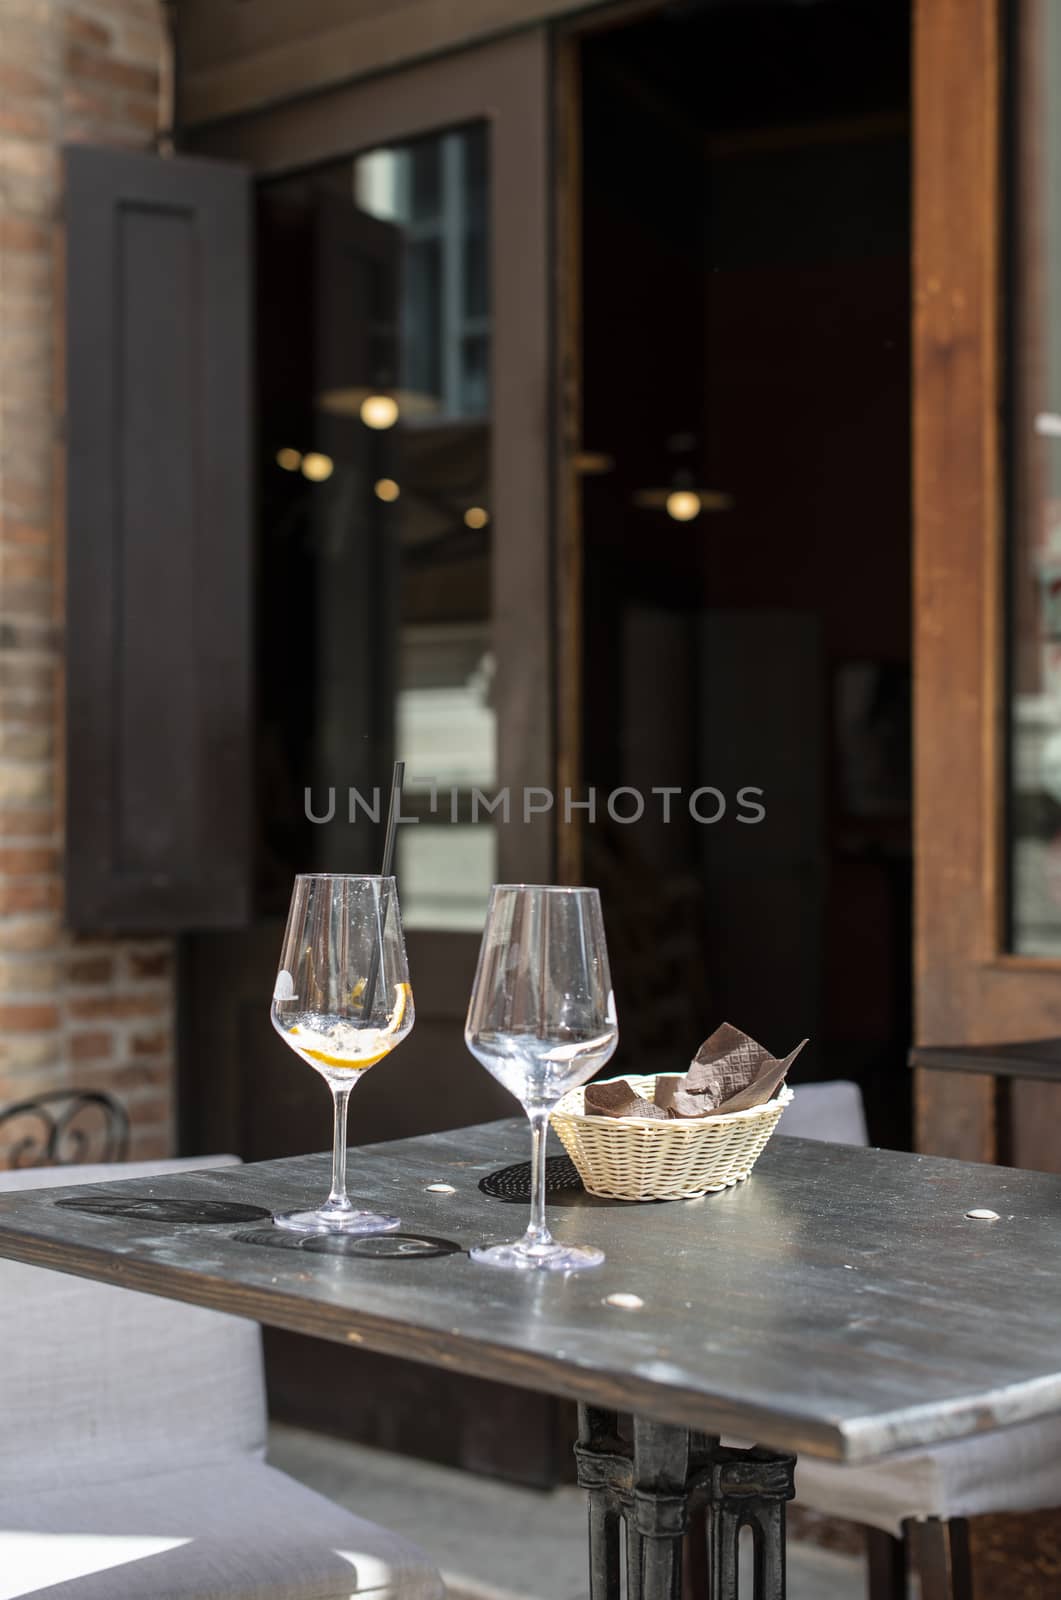 Restaurant on italian street. Two empty glasses of wine on table.